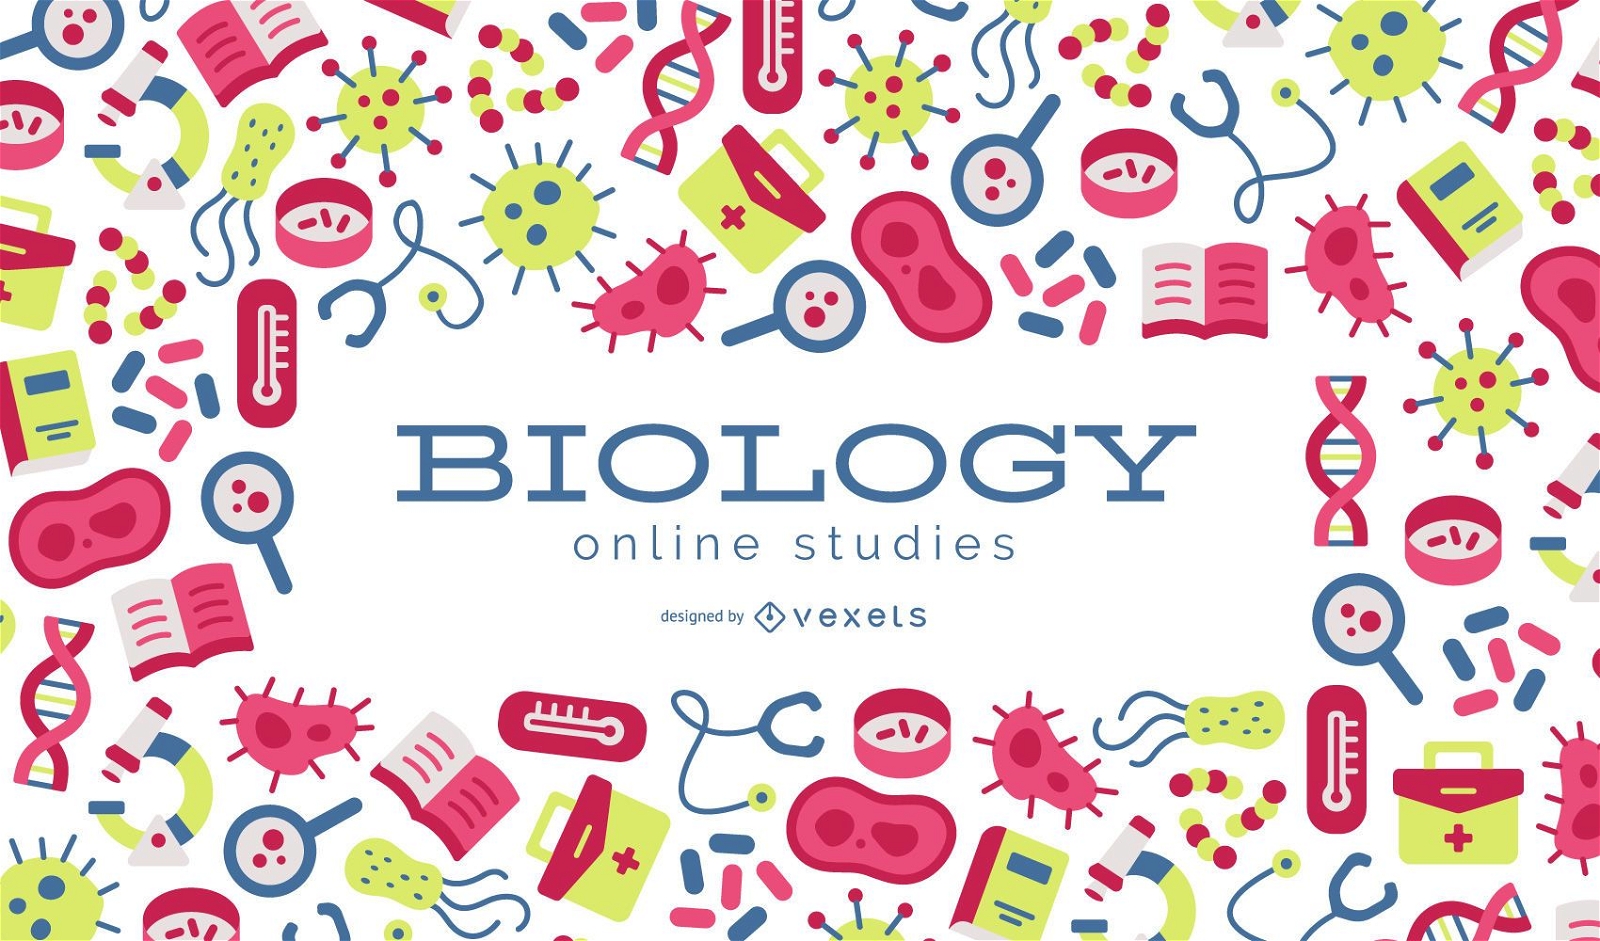 Biologia Online Studies Background Design